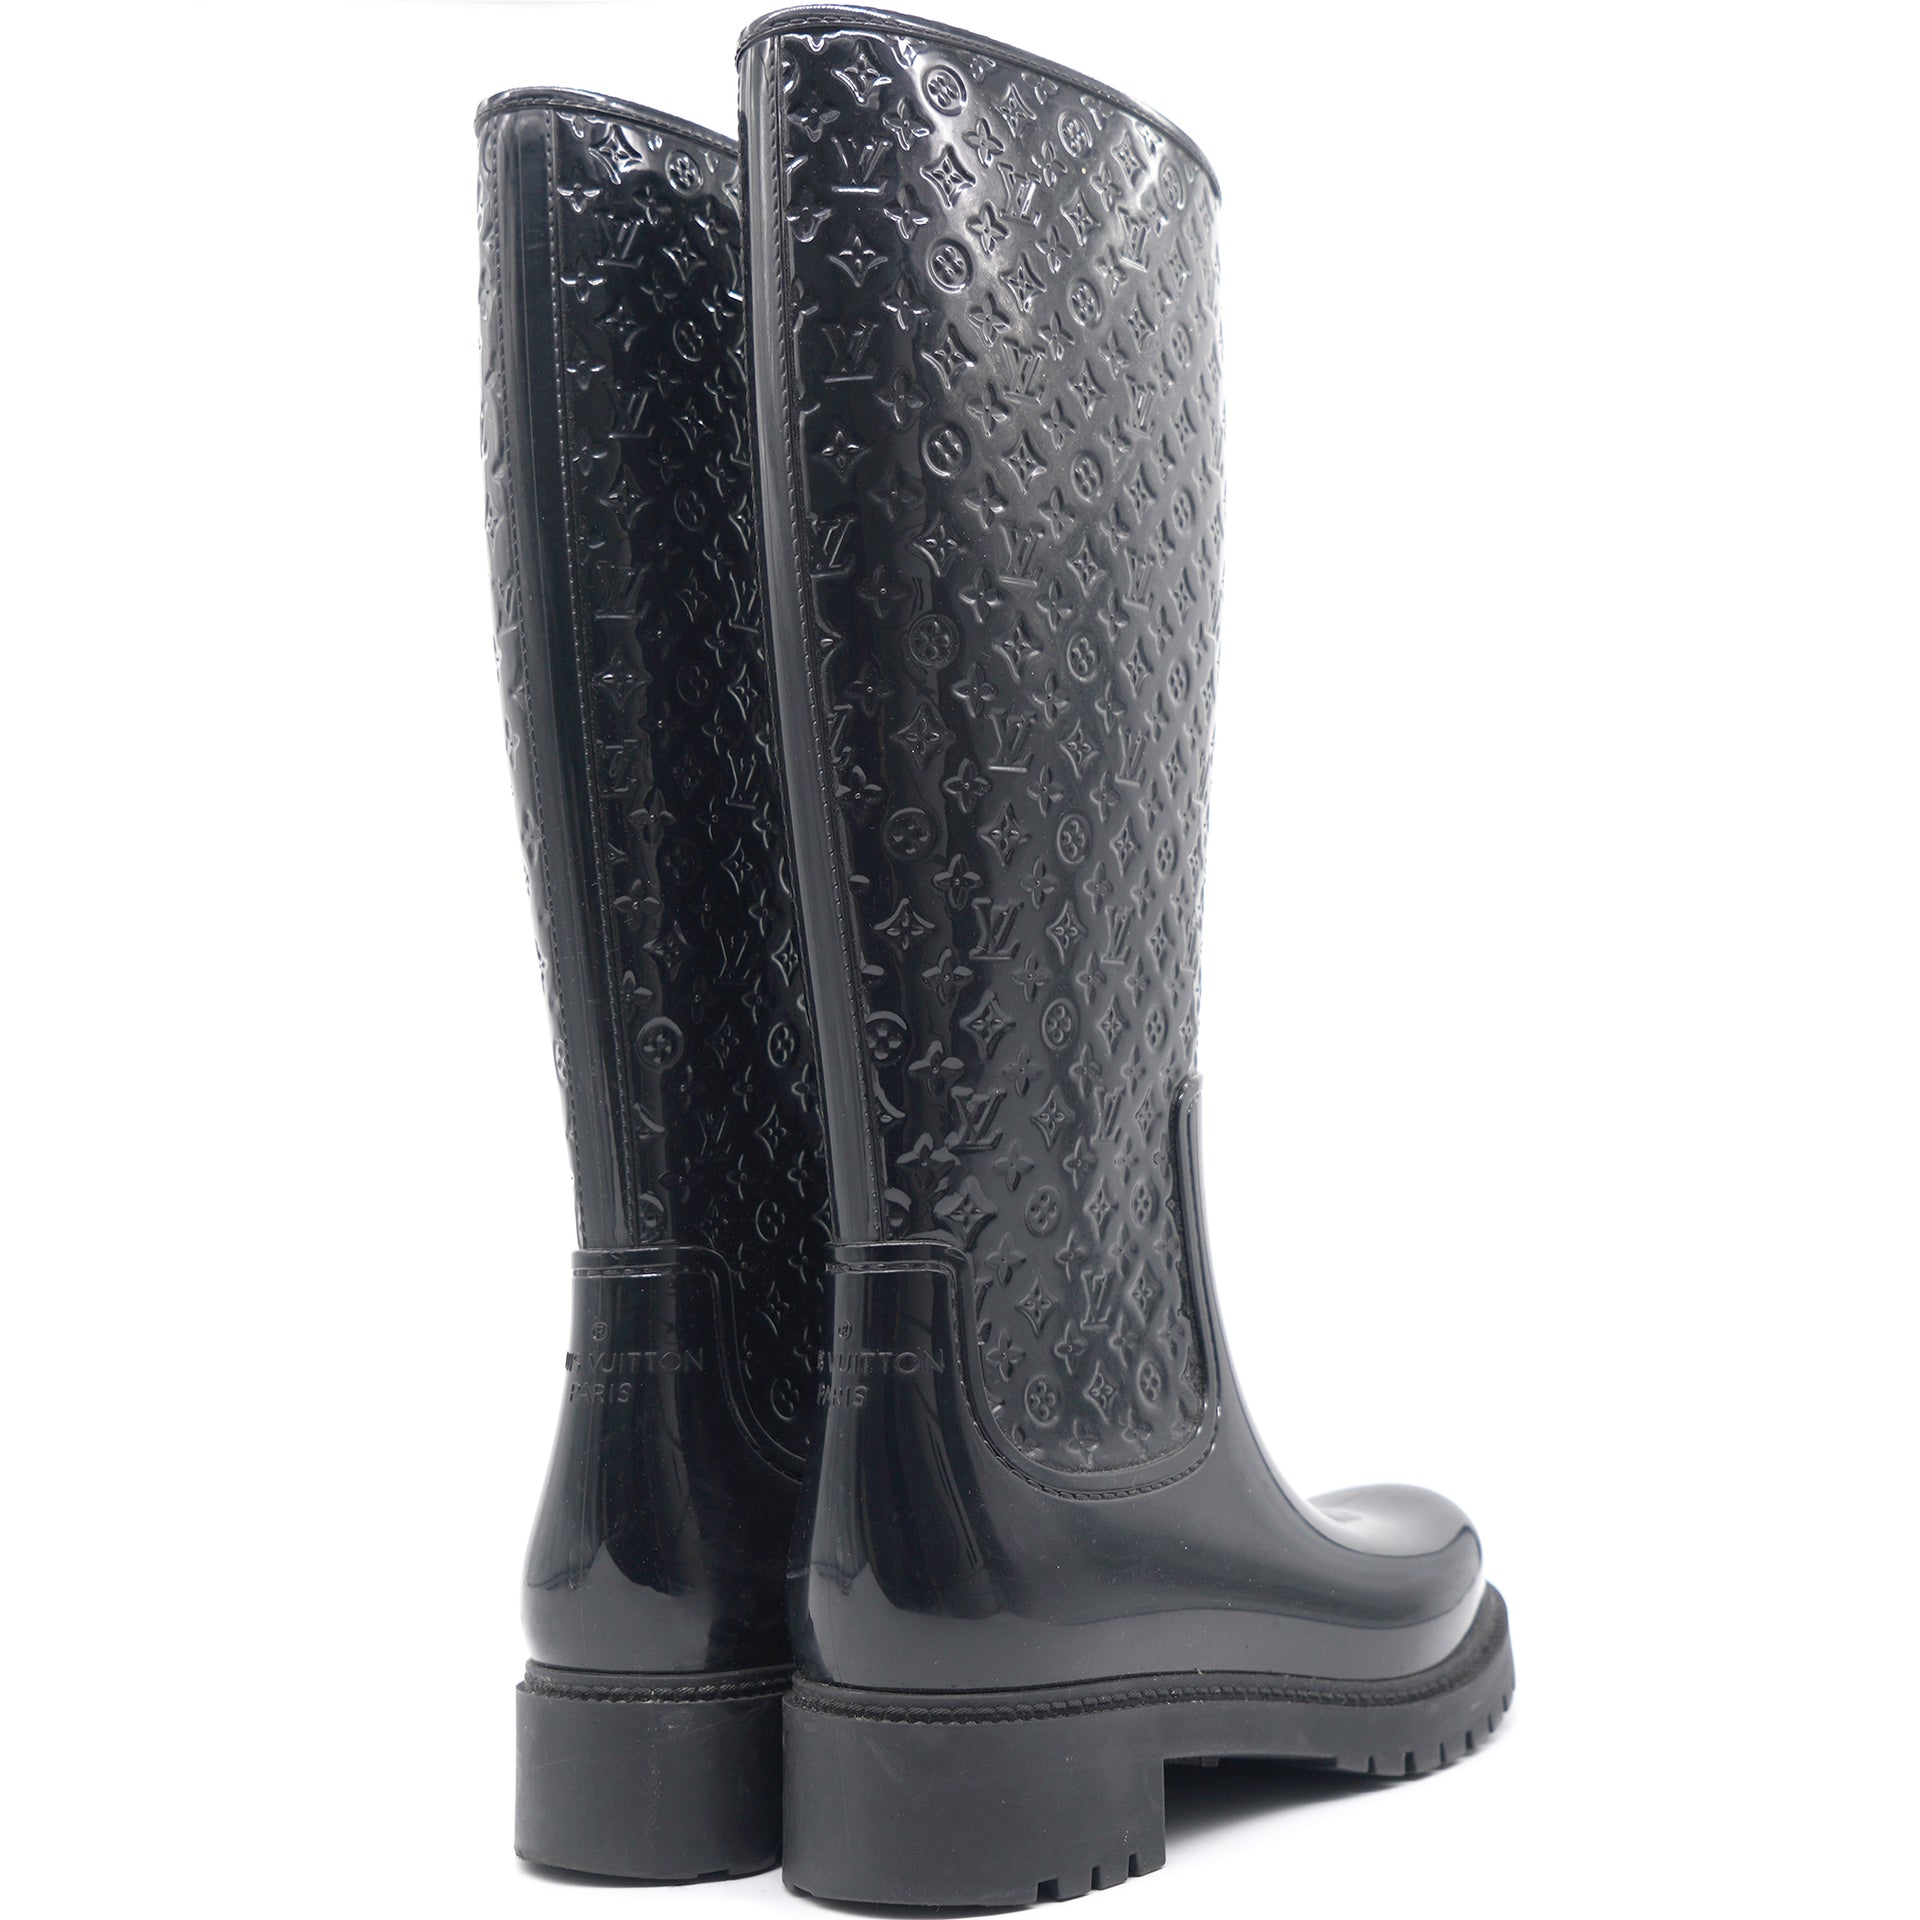 Louis Vuitton Women Black Rubber Rainboots Tall Wellington Boots